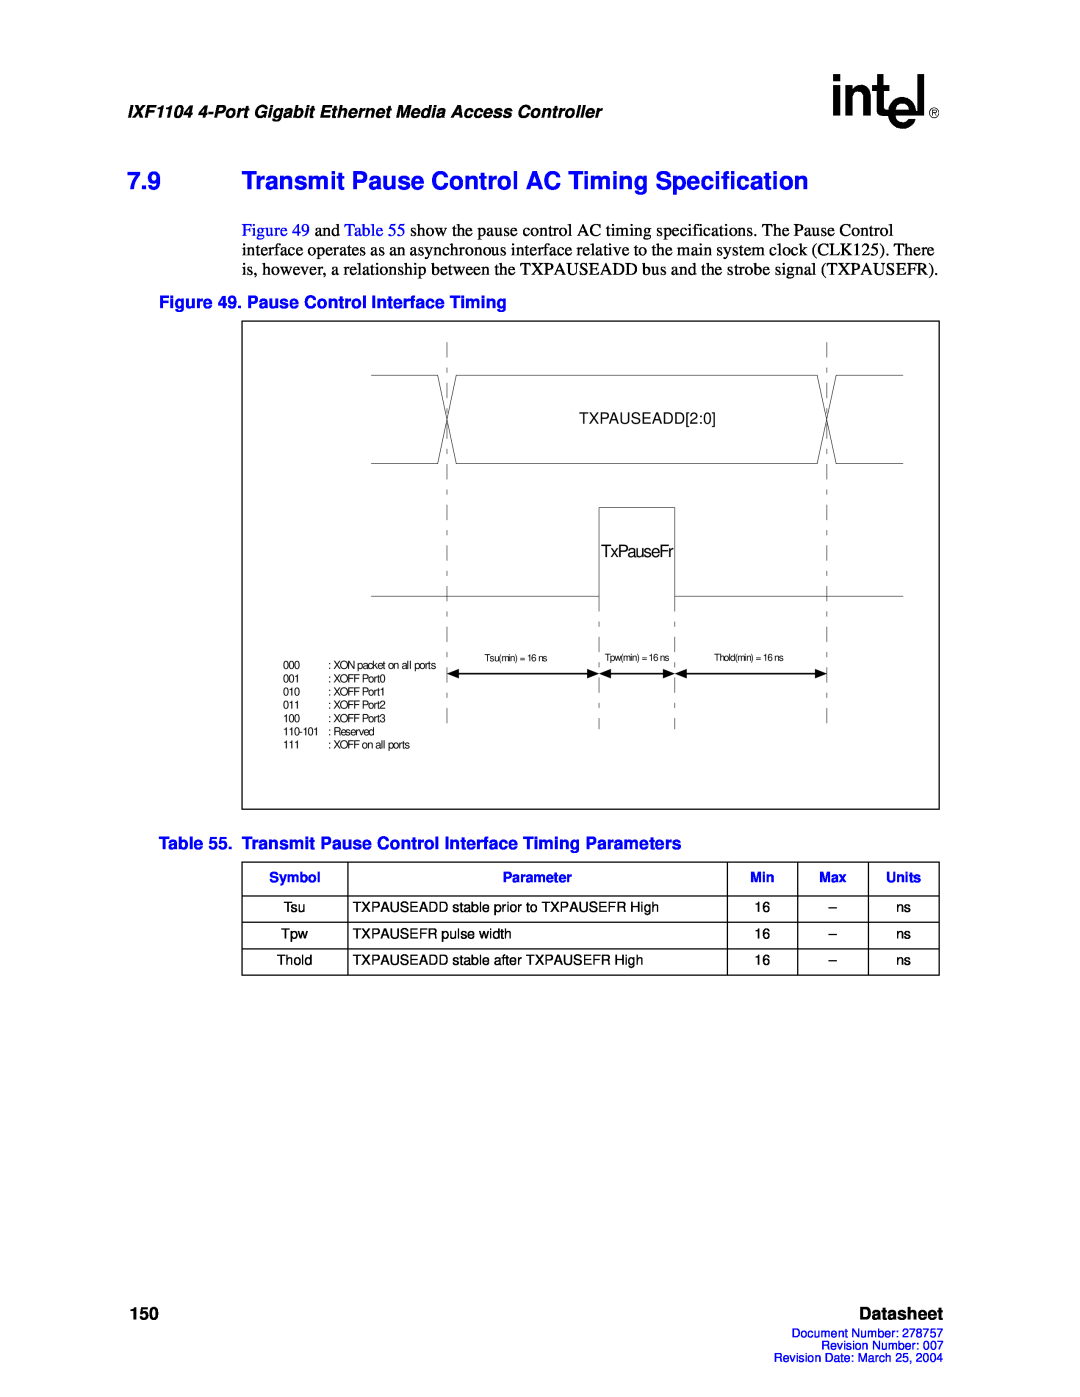 Intel IXF1104 manual 7.9Transmit Pause Control AC Timing Specification, Datasheet 